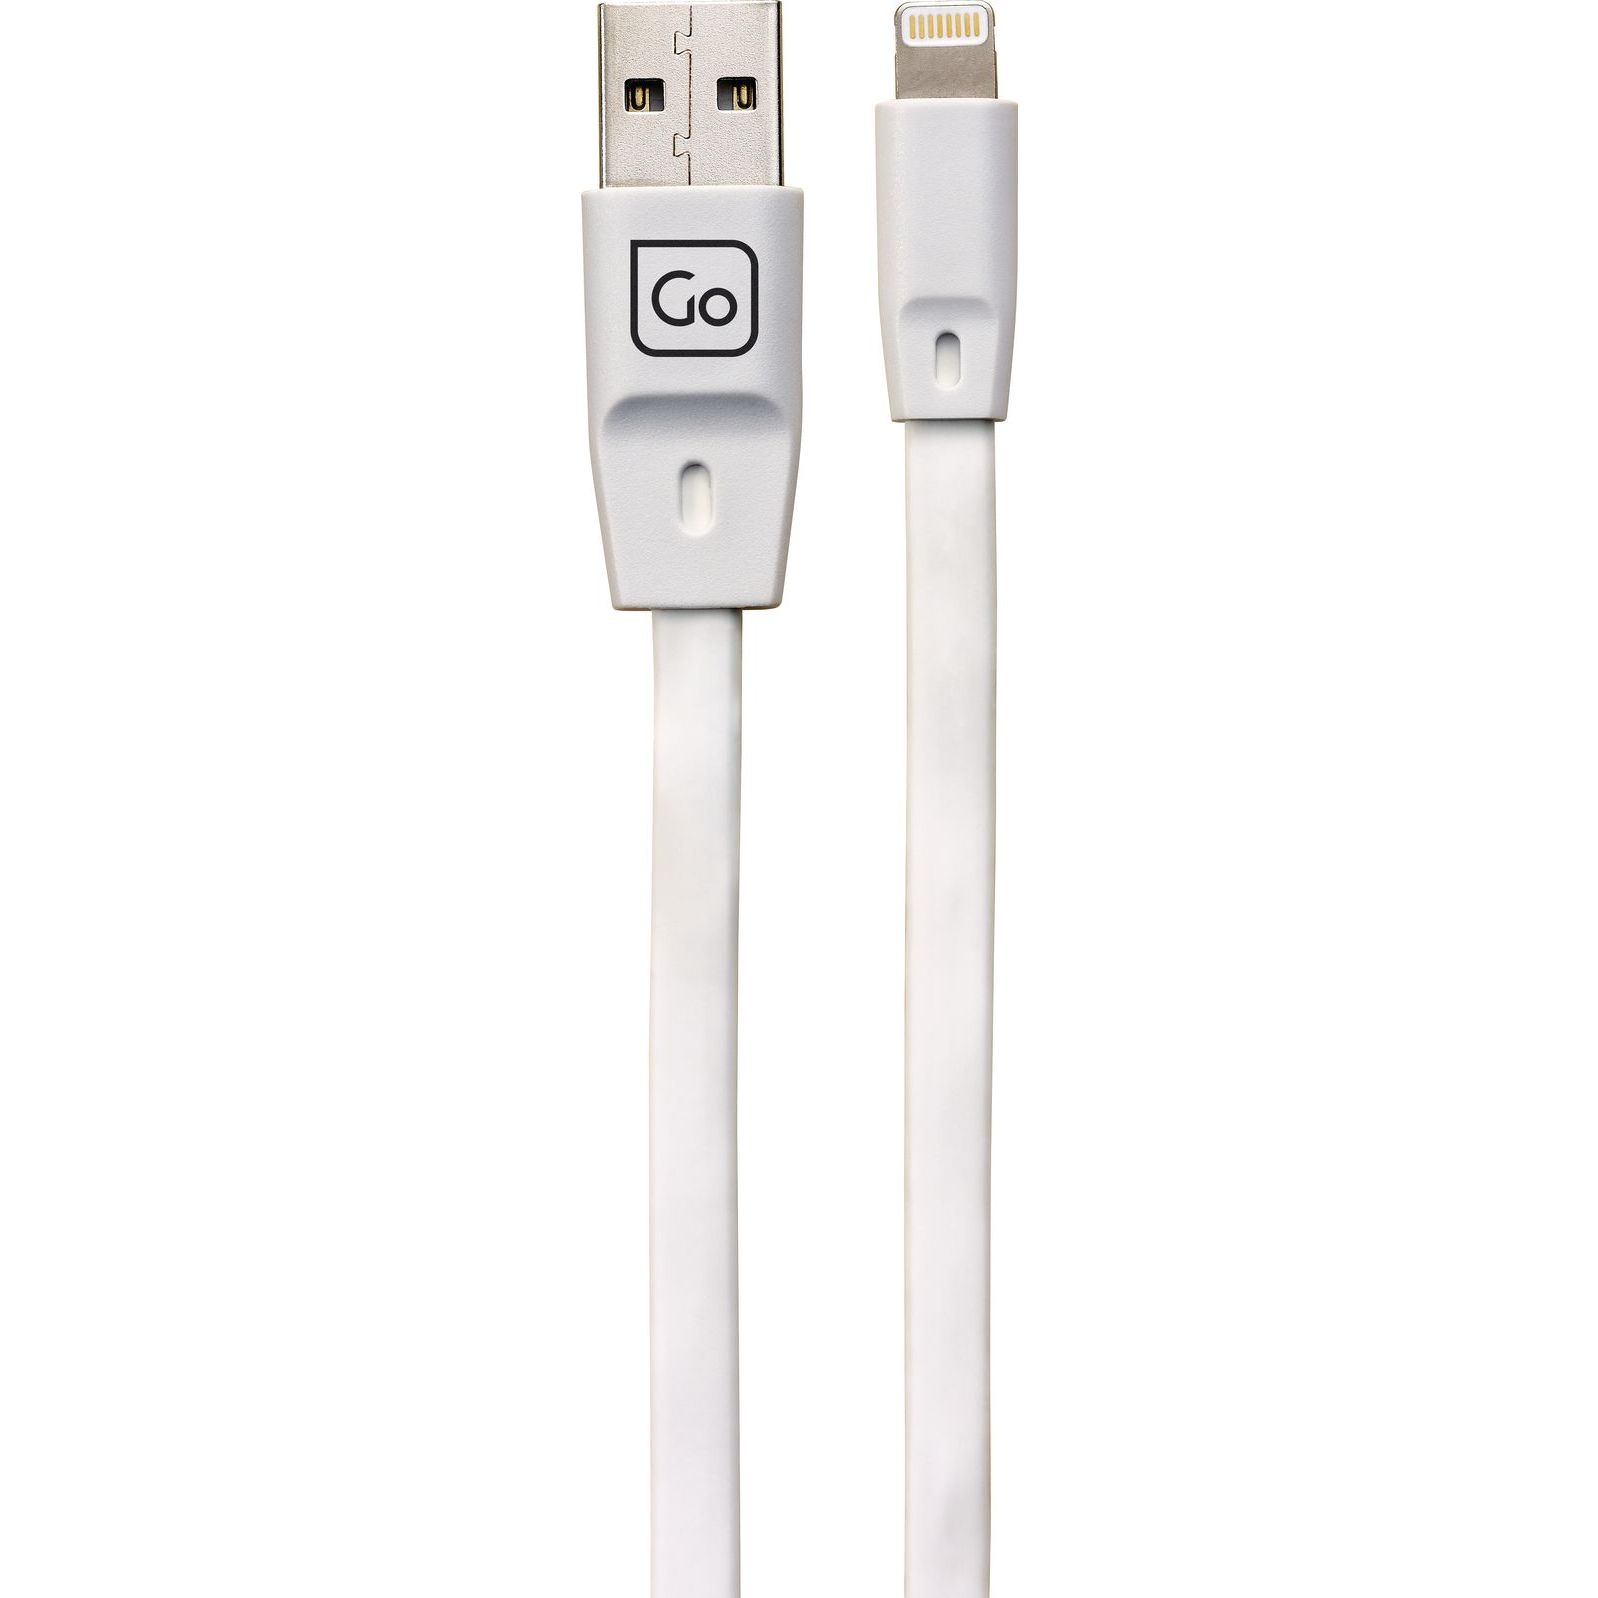 2M USB Cable (APP)